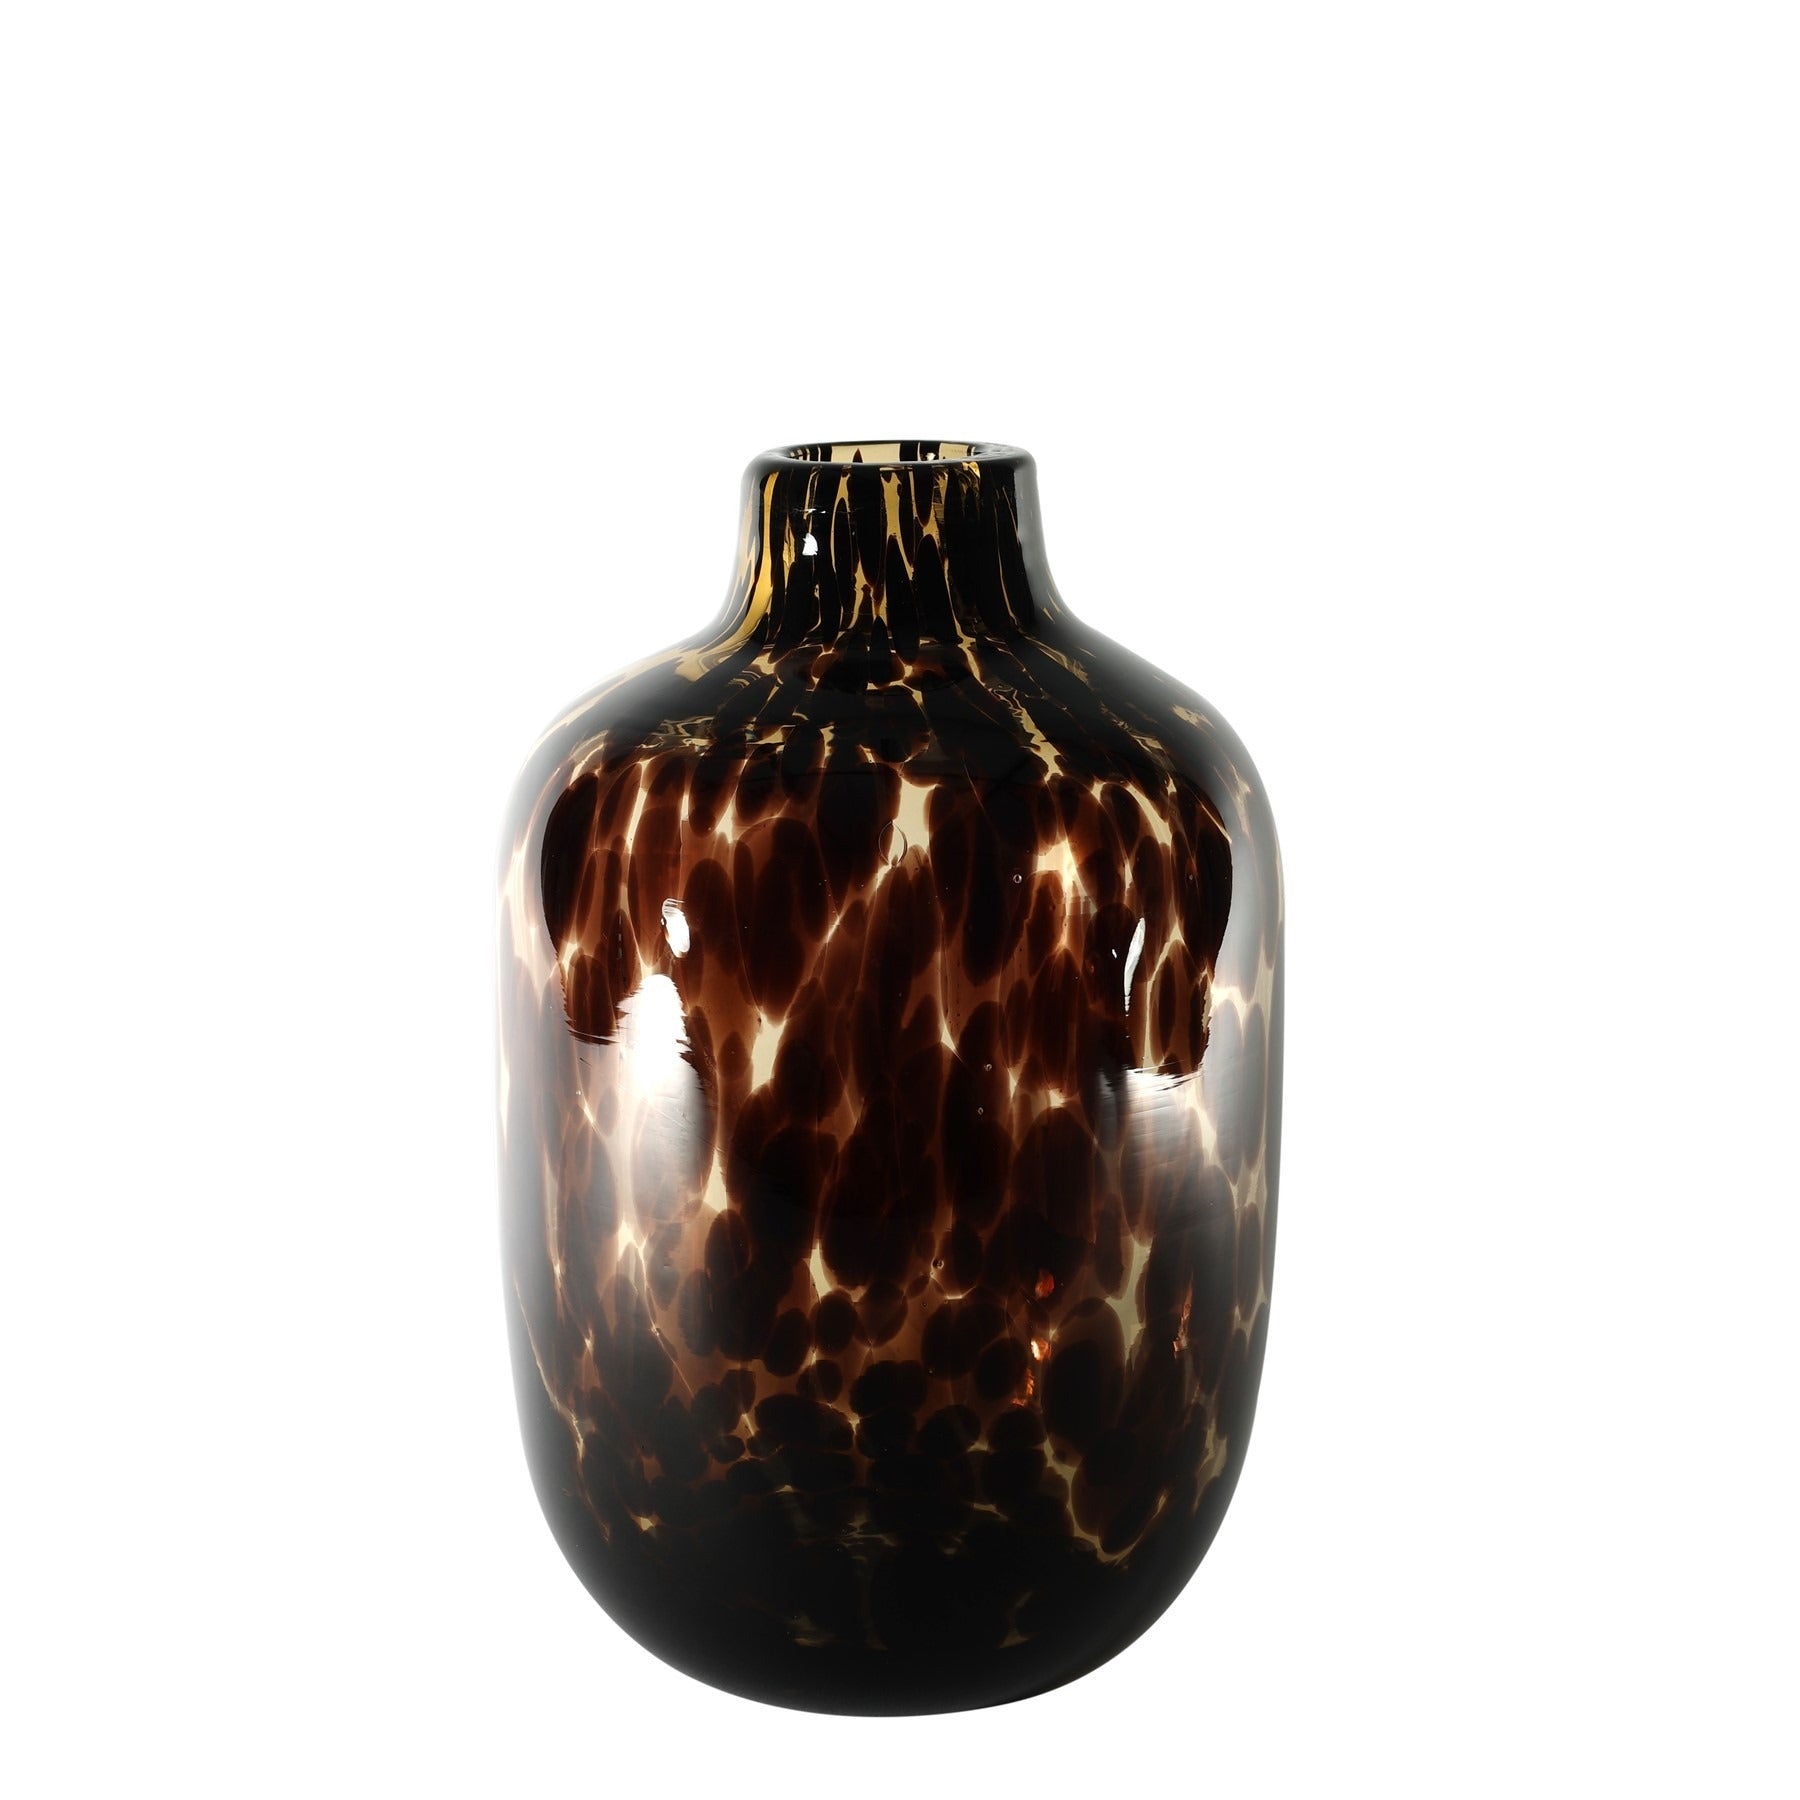 View Arabella Mottled Brown Necked Vase H255x17cm information